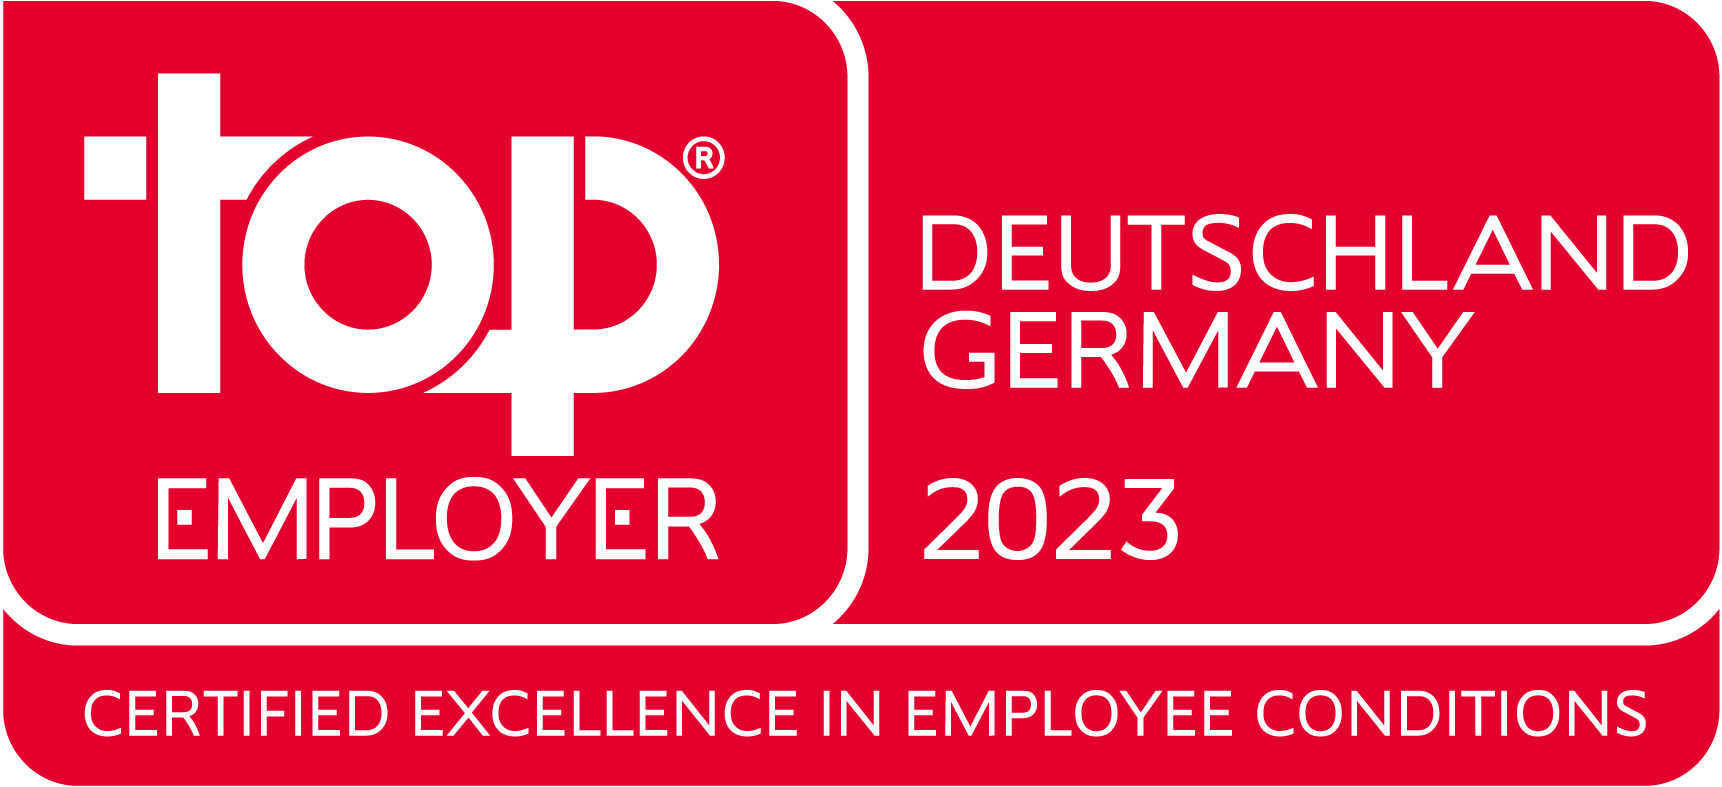 Top employer germany 2023 logo